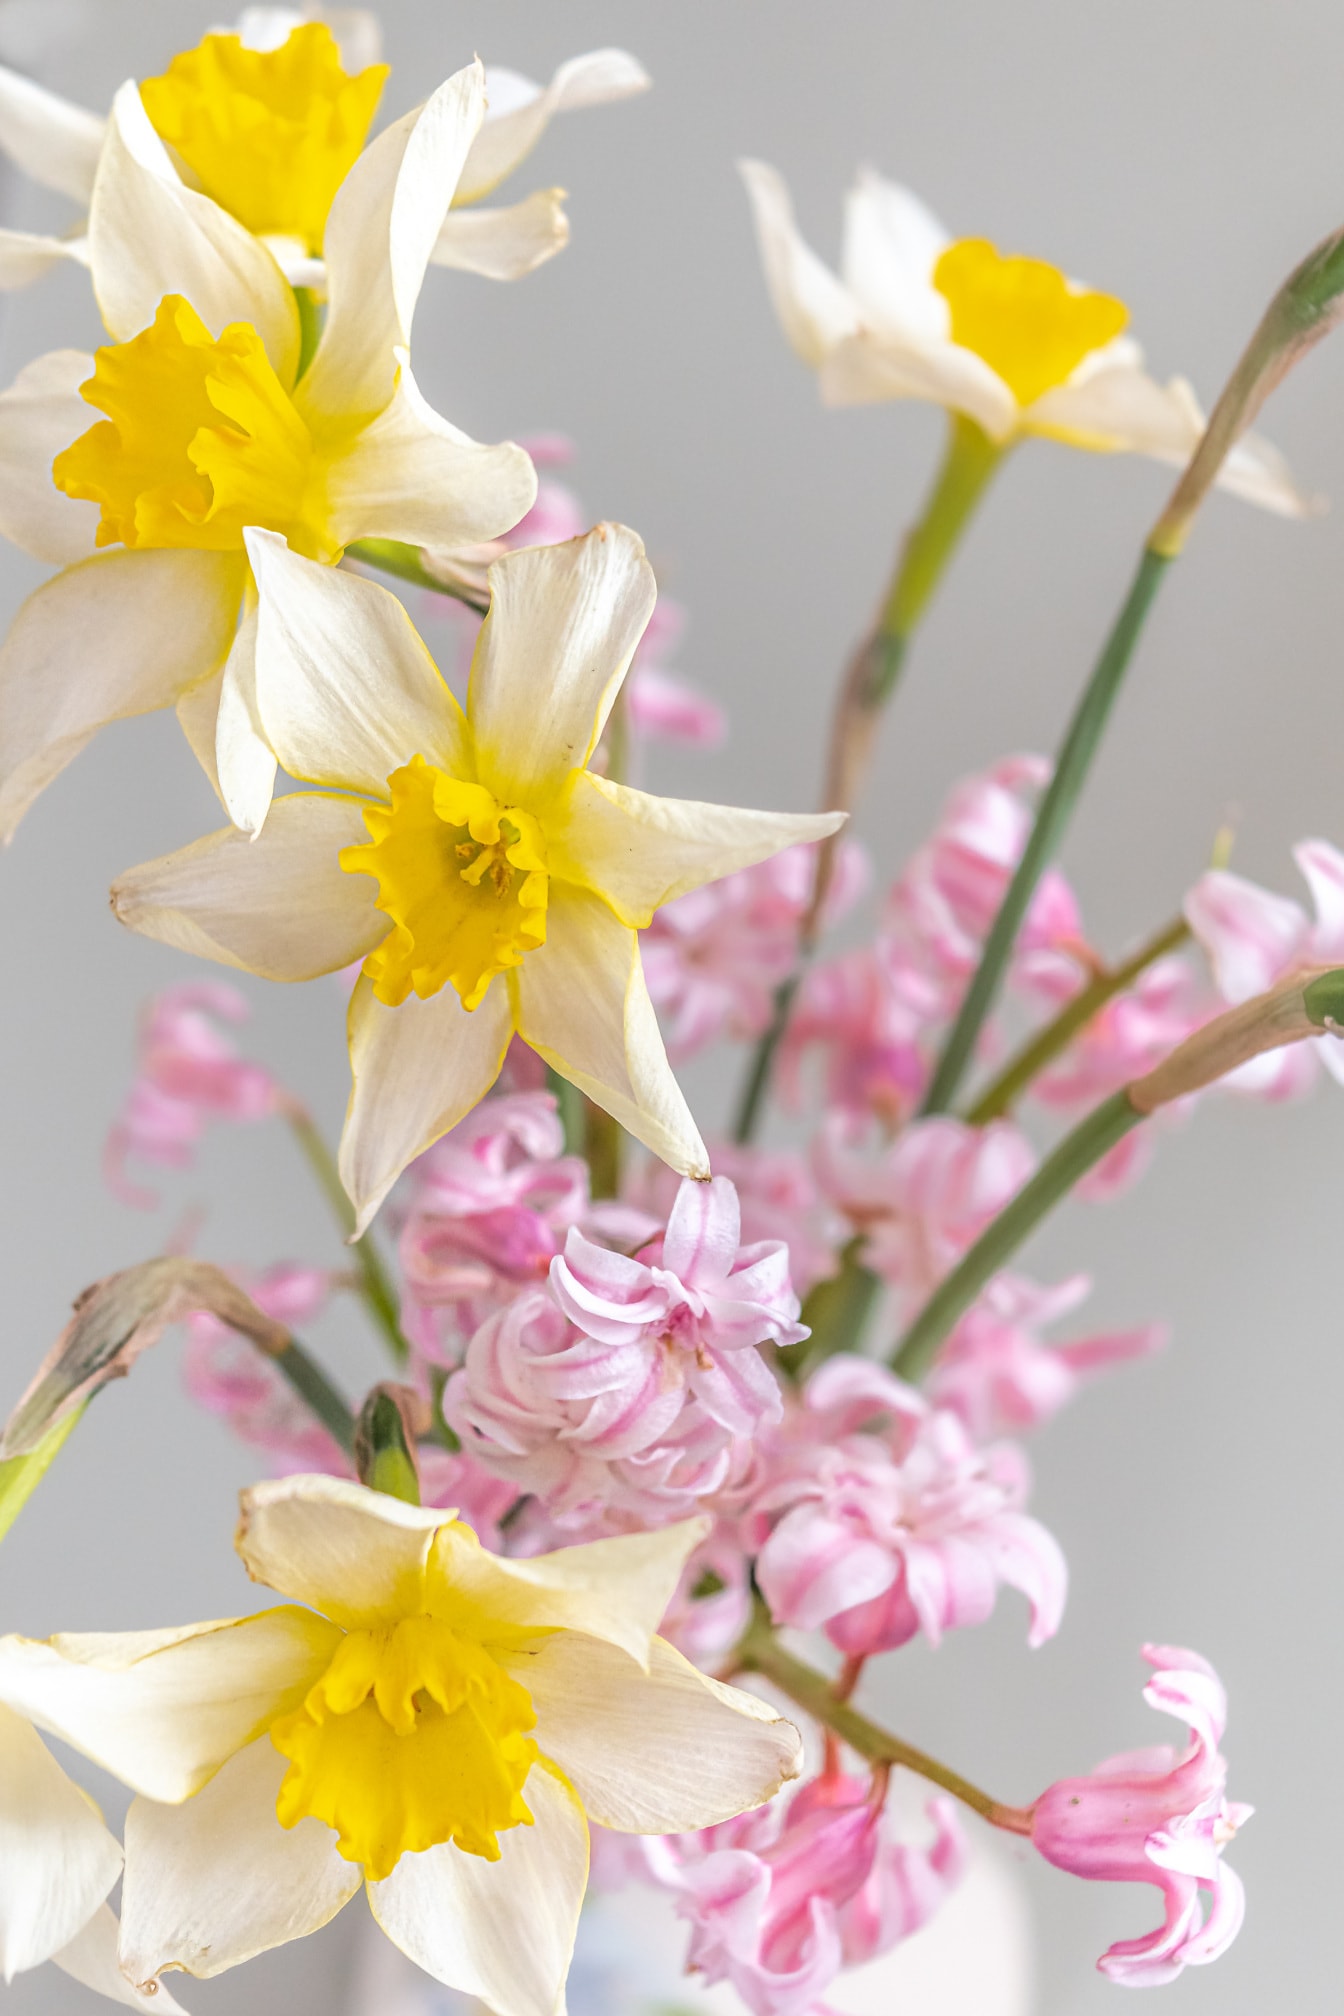 narcisă galbenă, roz, zambila, până aproape, vaza, floare, buchet, decor